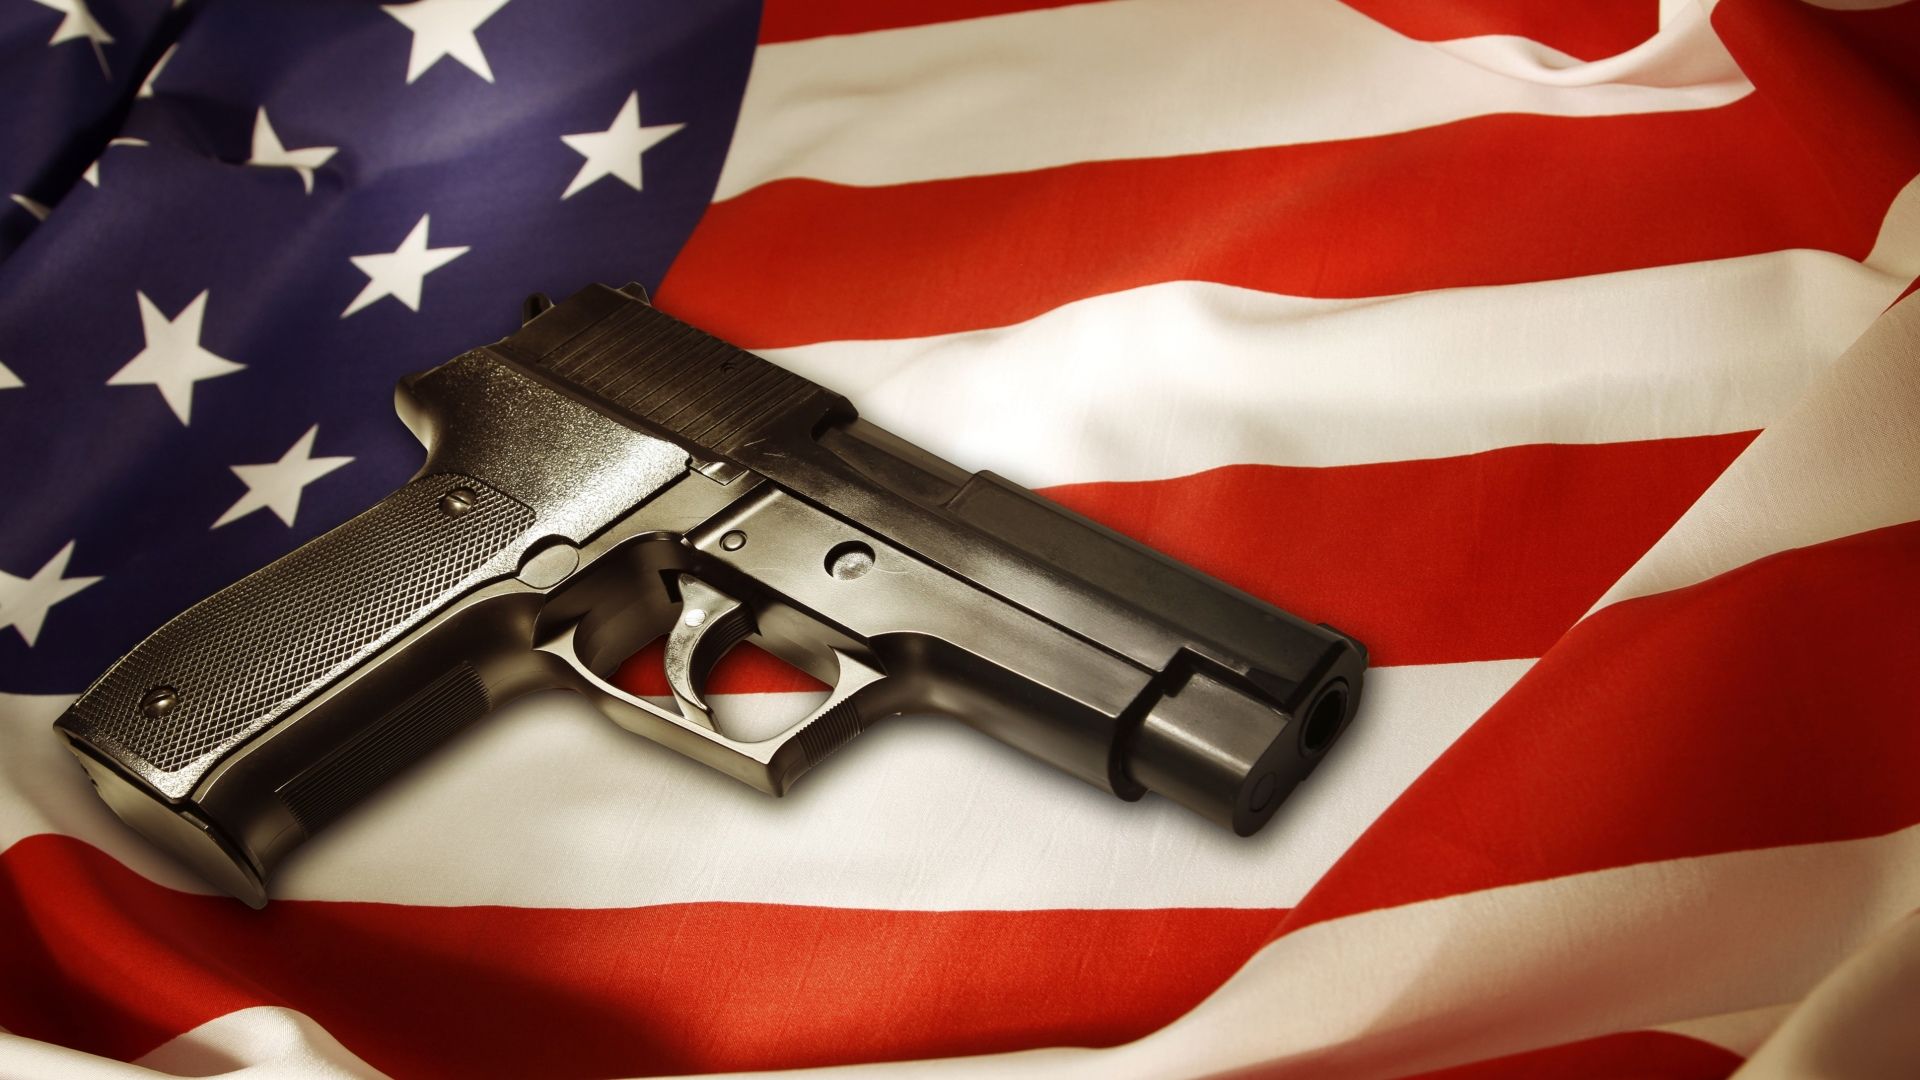 Пистолет, американский флаг, флаг США, Gun, pistol, flag USA (horizontal)